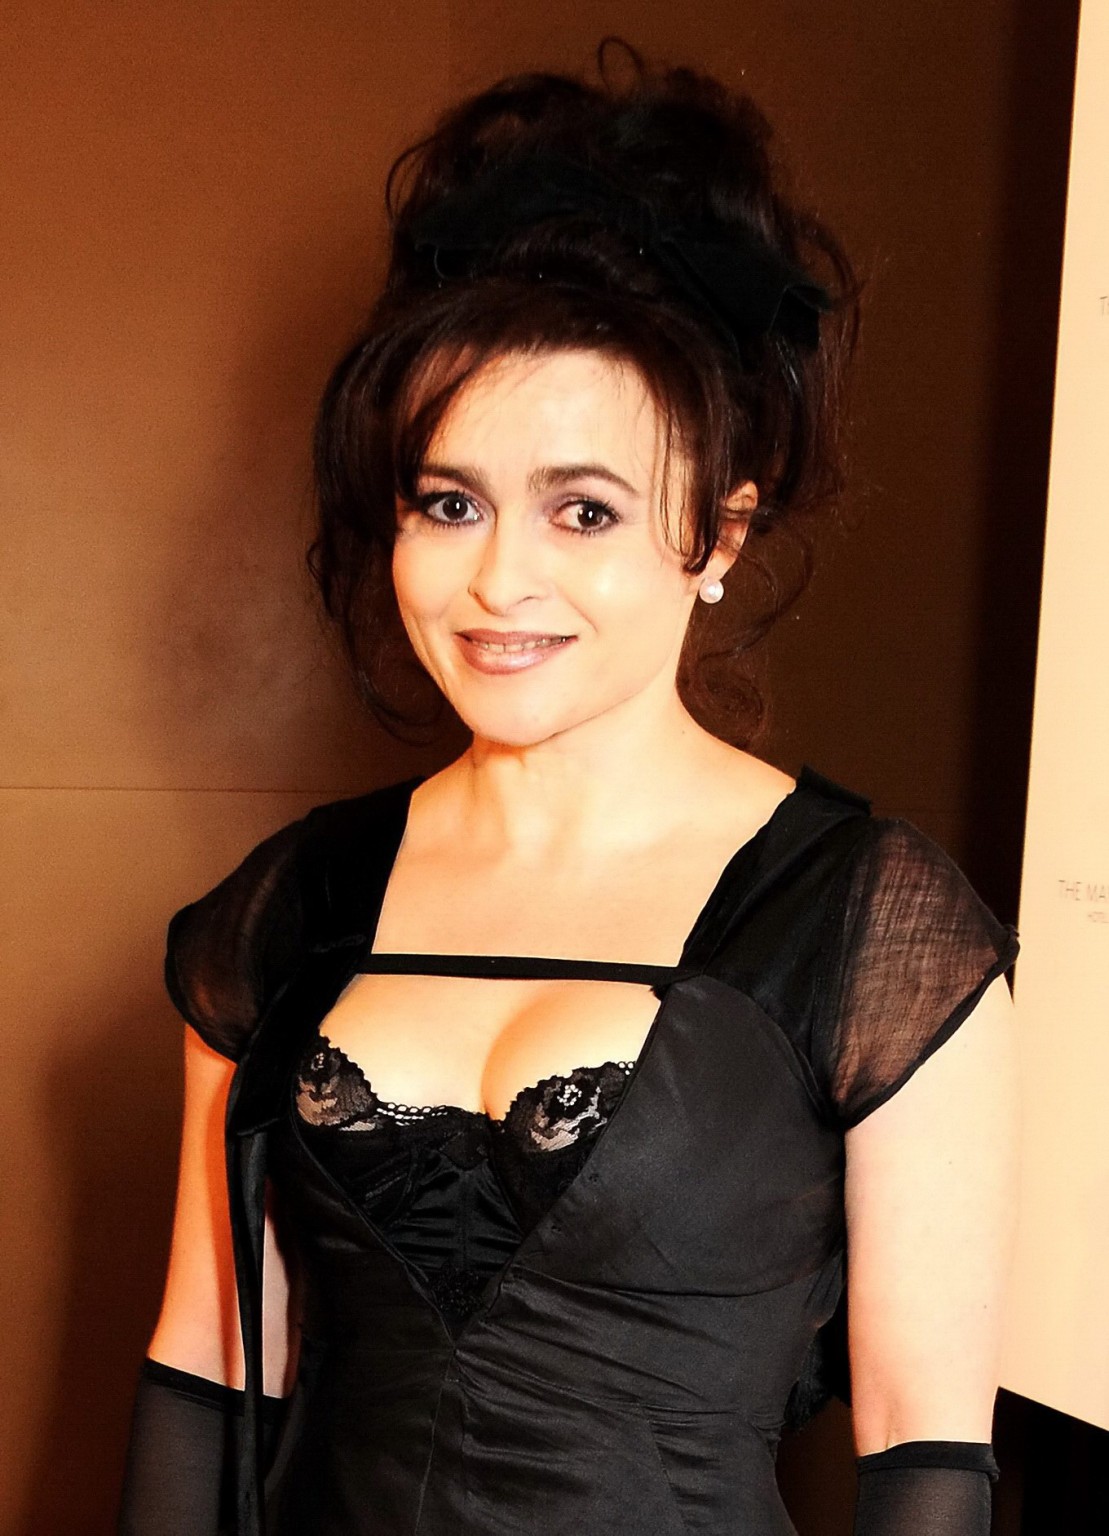 Helena bonham carter korsett spitze tragen ein tiefes v ausschnitt kleid bei london film 
 #75243112